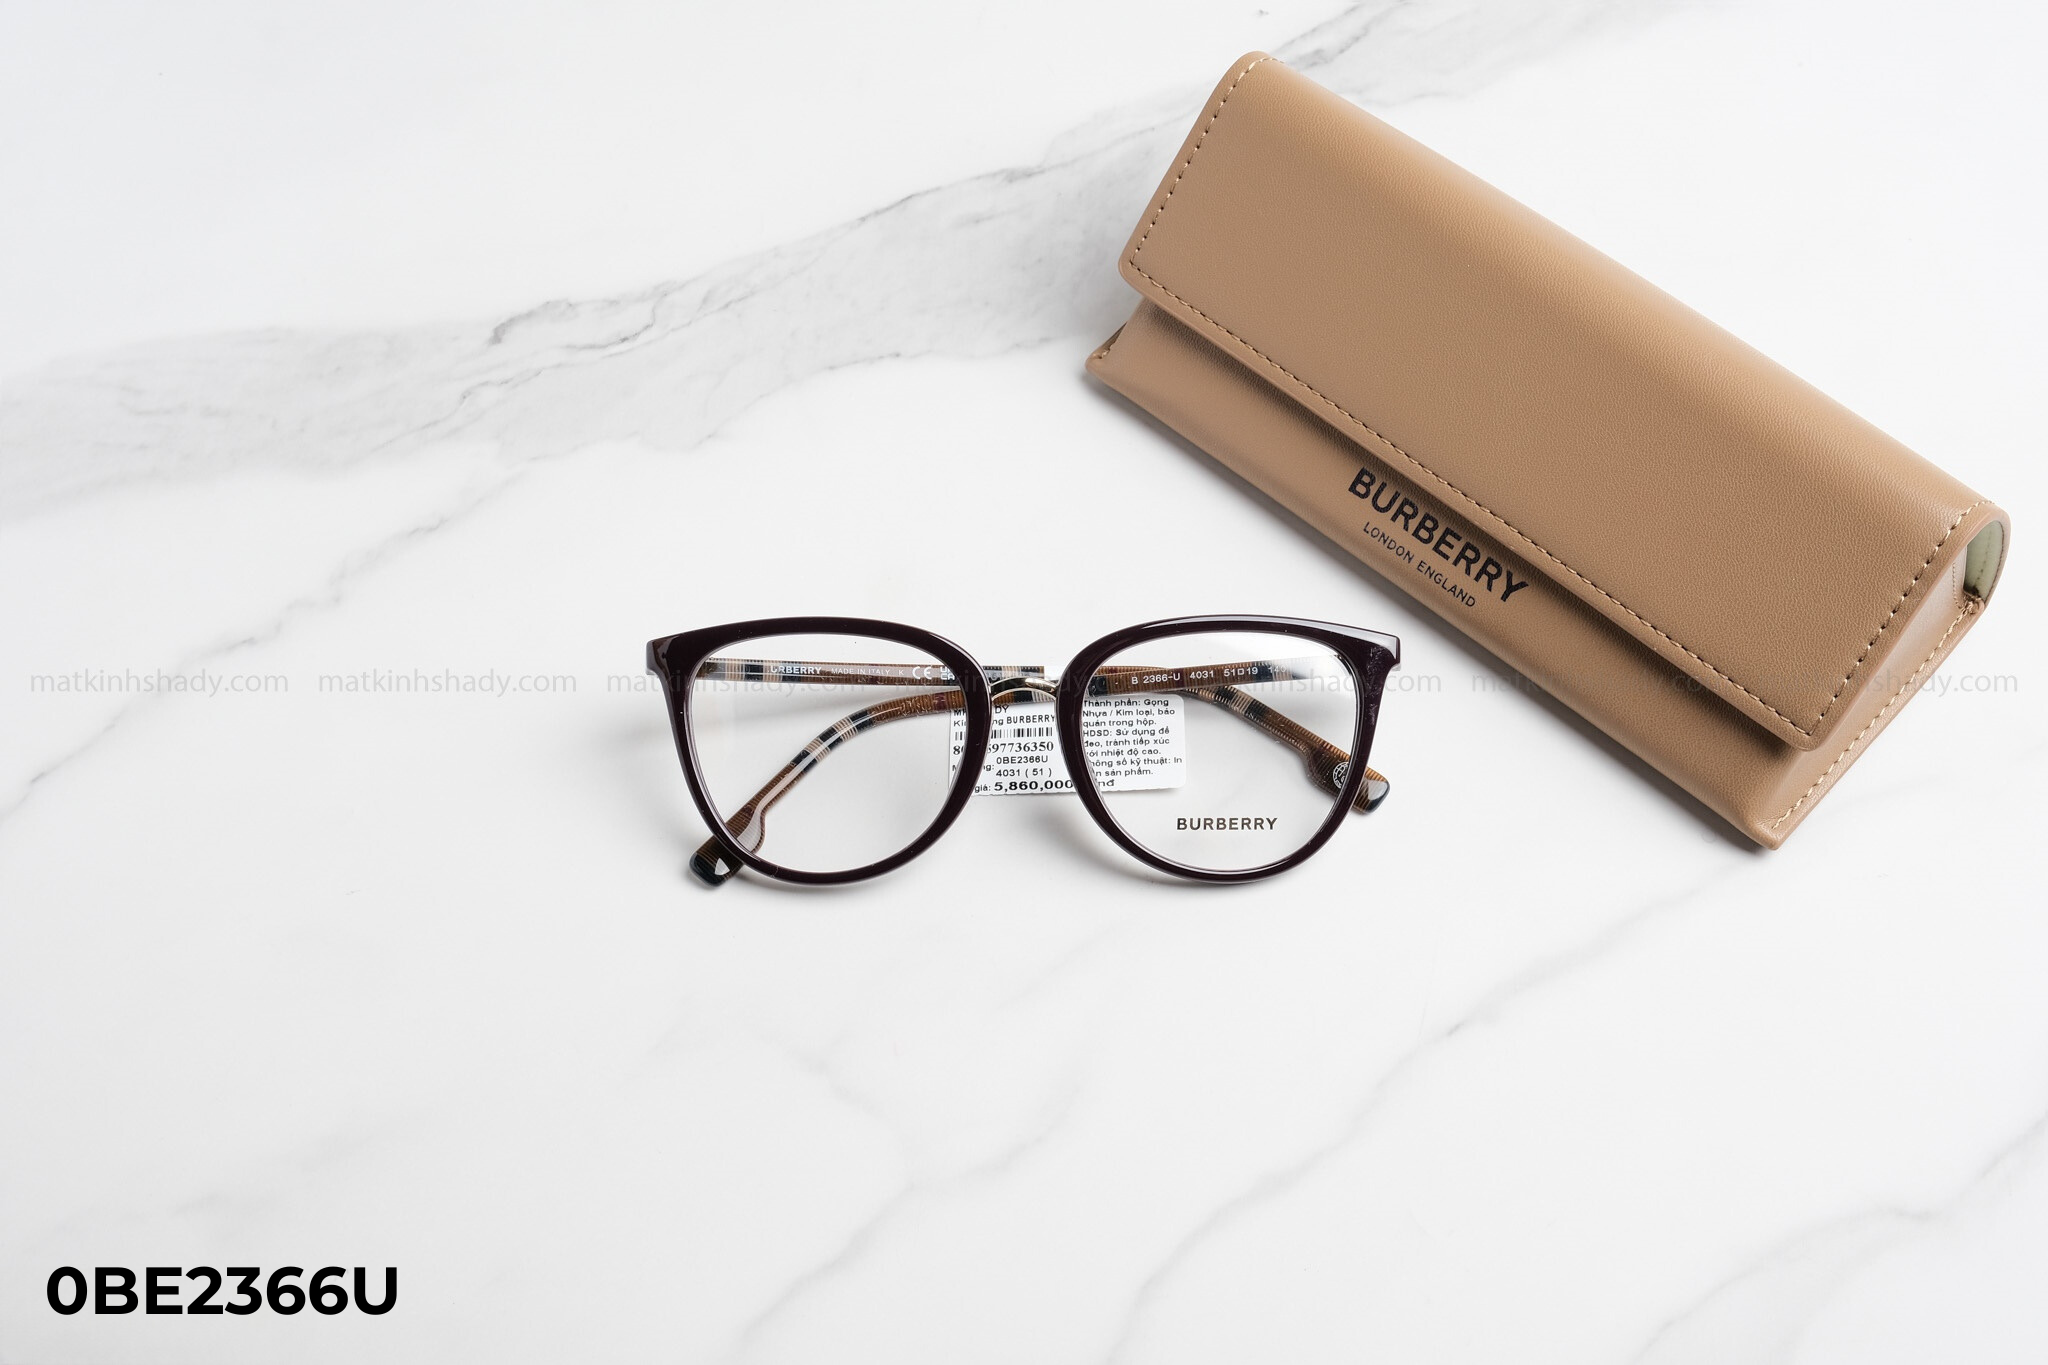  Burberry Eyewear - Glasses - 0BE2366U 